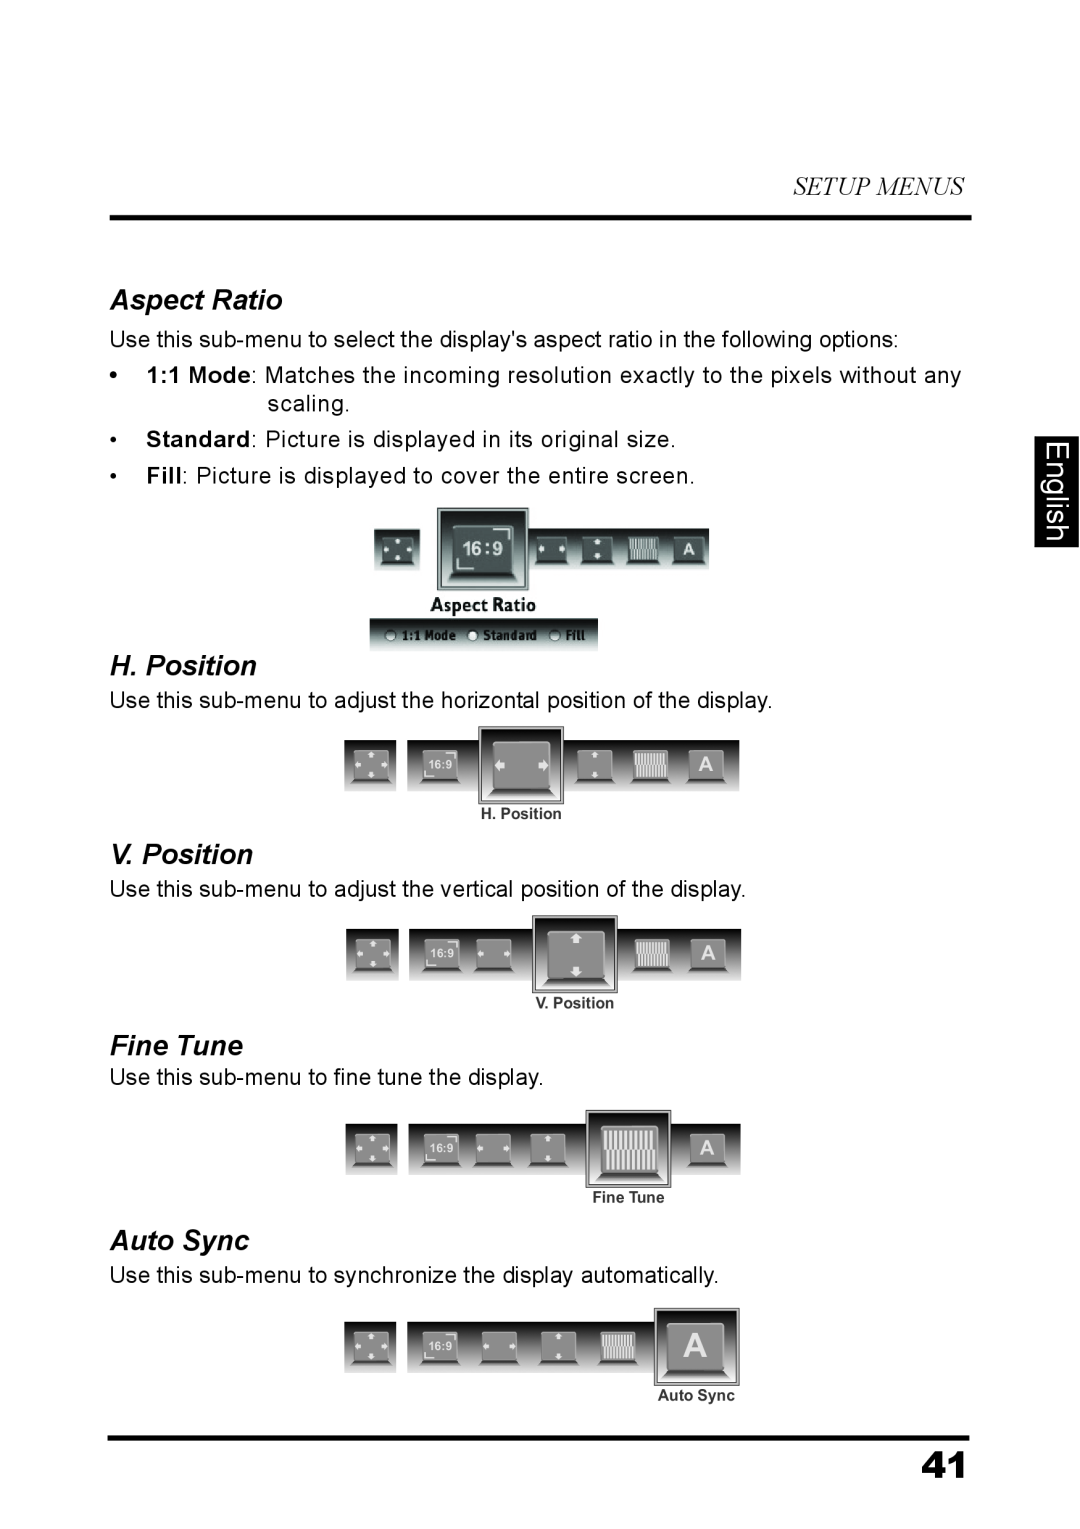 Westinghouse LD-3237 user manual Aspect Ratio, H. Position, V. Position, Fine Tune, Auto Sync, English, Setup Menus 